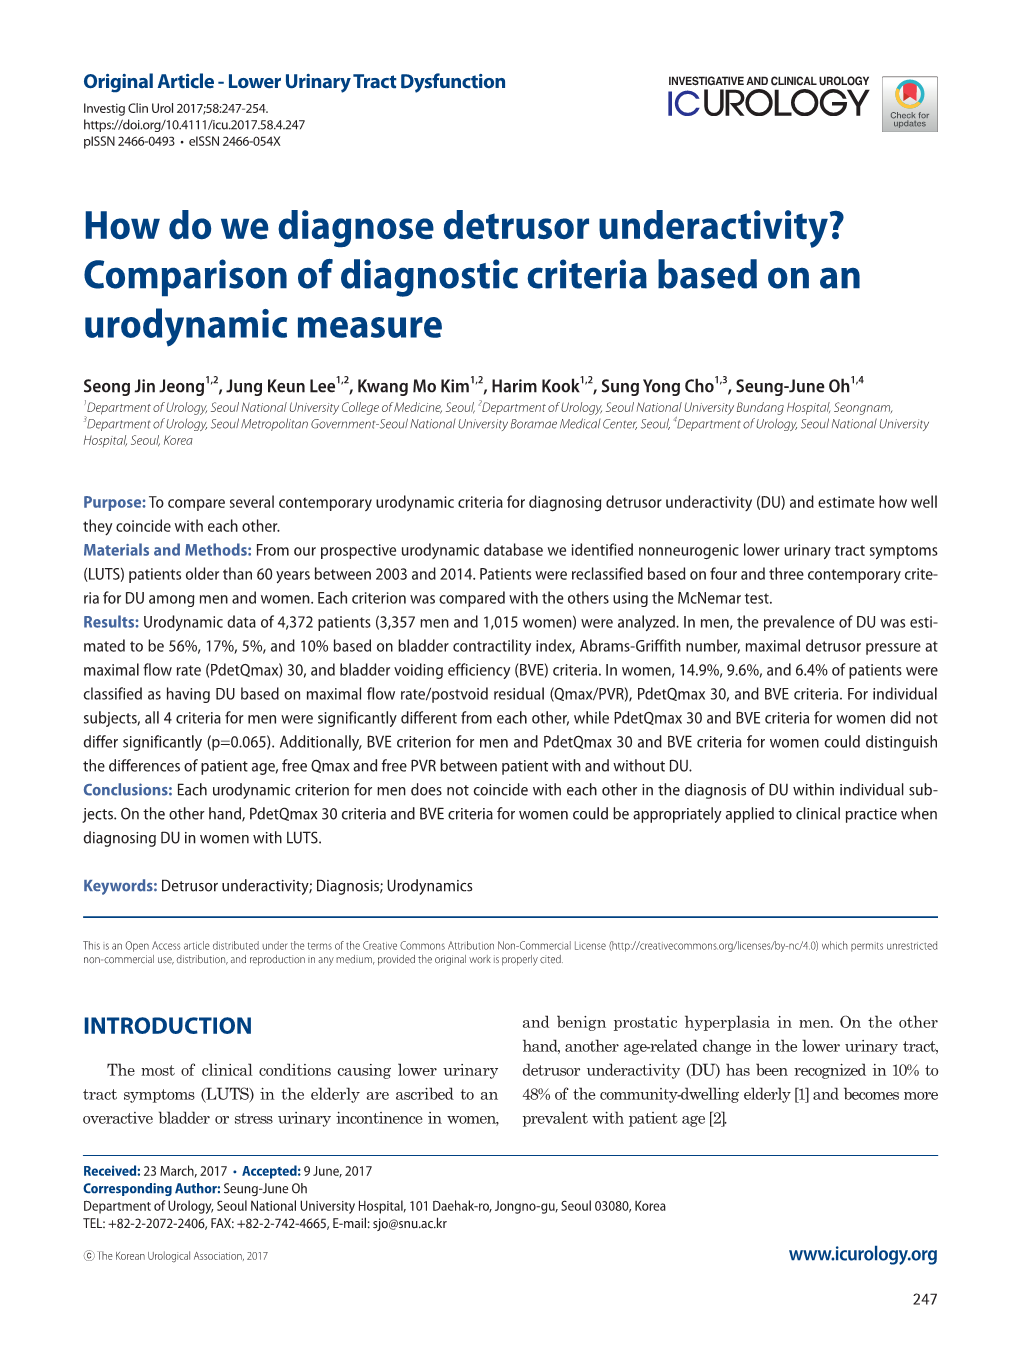 Comparison of Diagnostic Criteria Based on an Urodynamic Measure